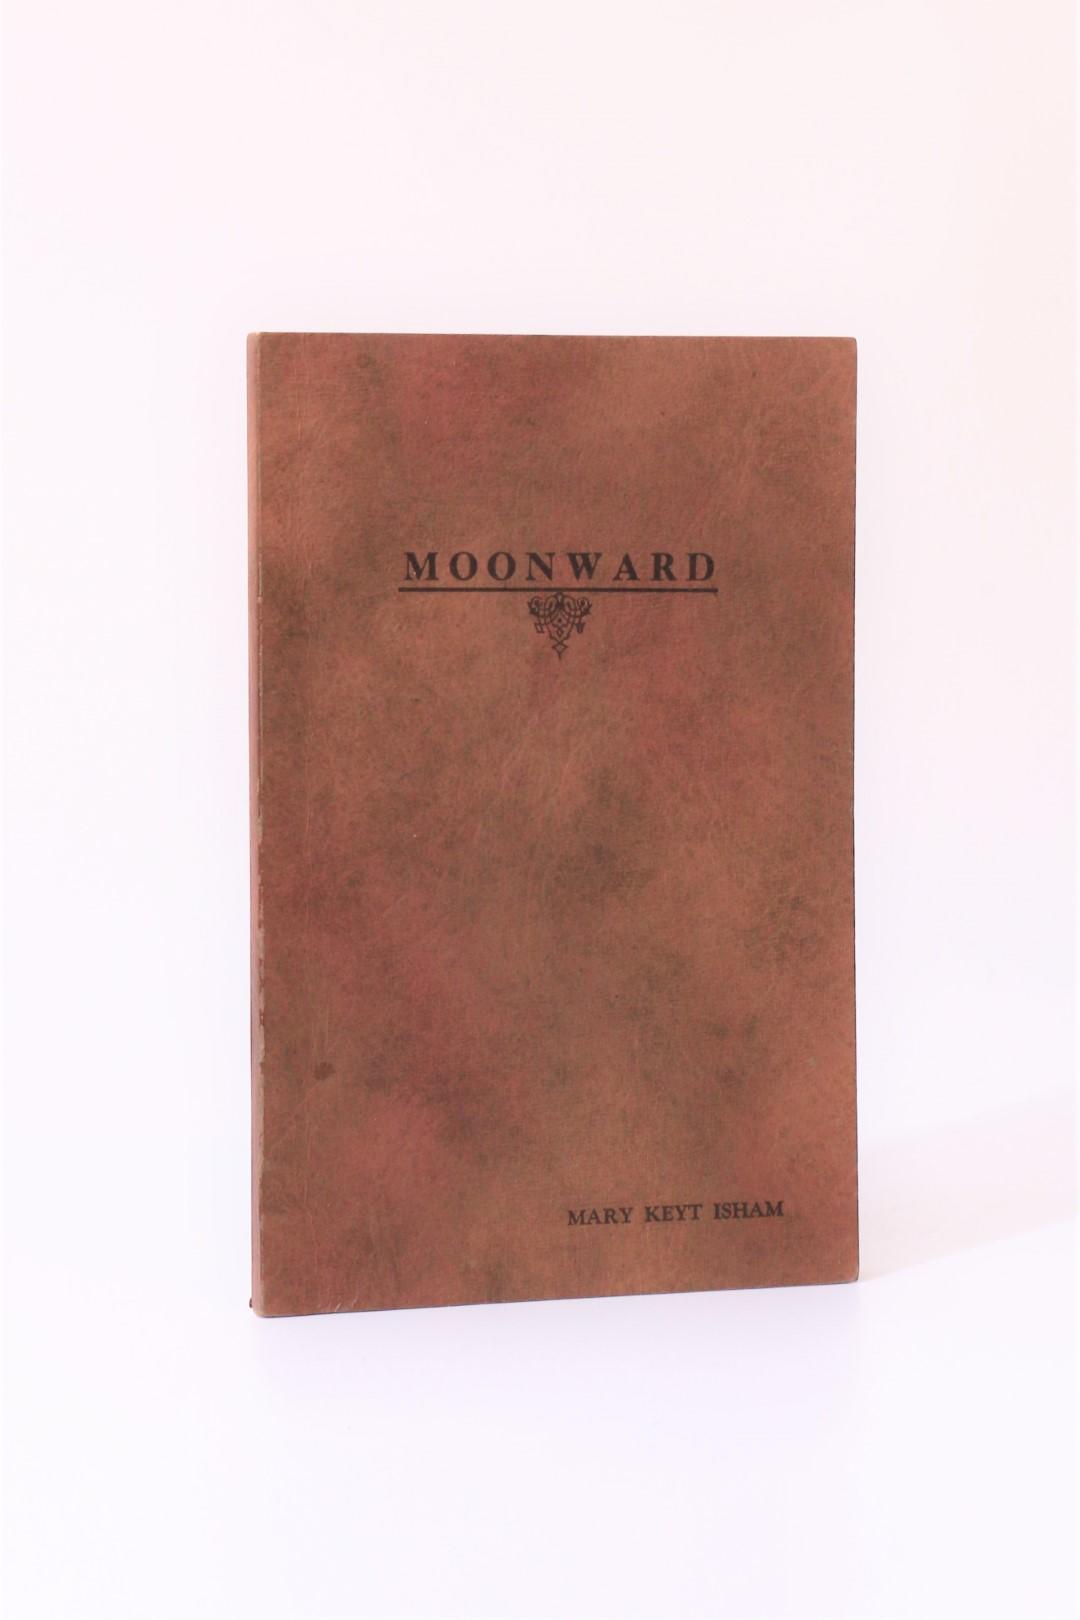 Mary Keyt Isham - Moonward - Privately Printed, n.d. [c1925?], First Edition.